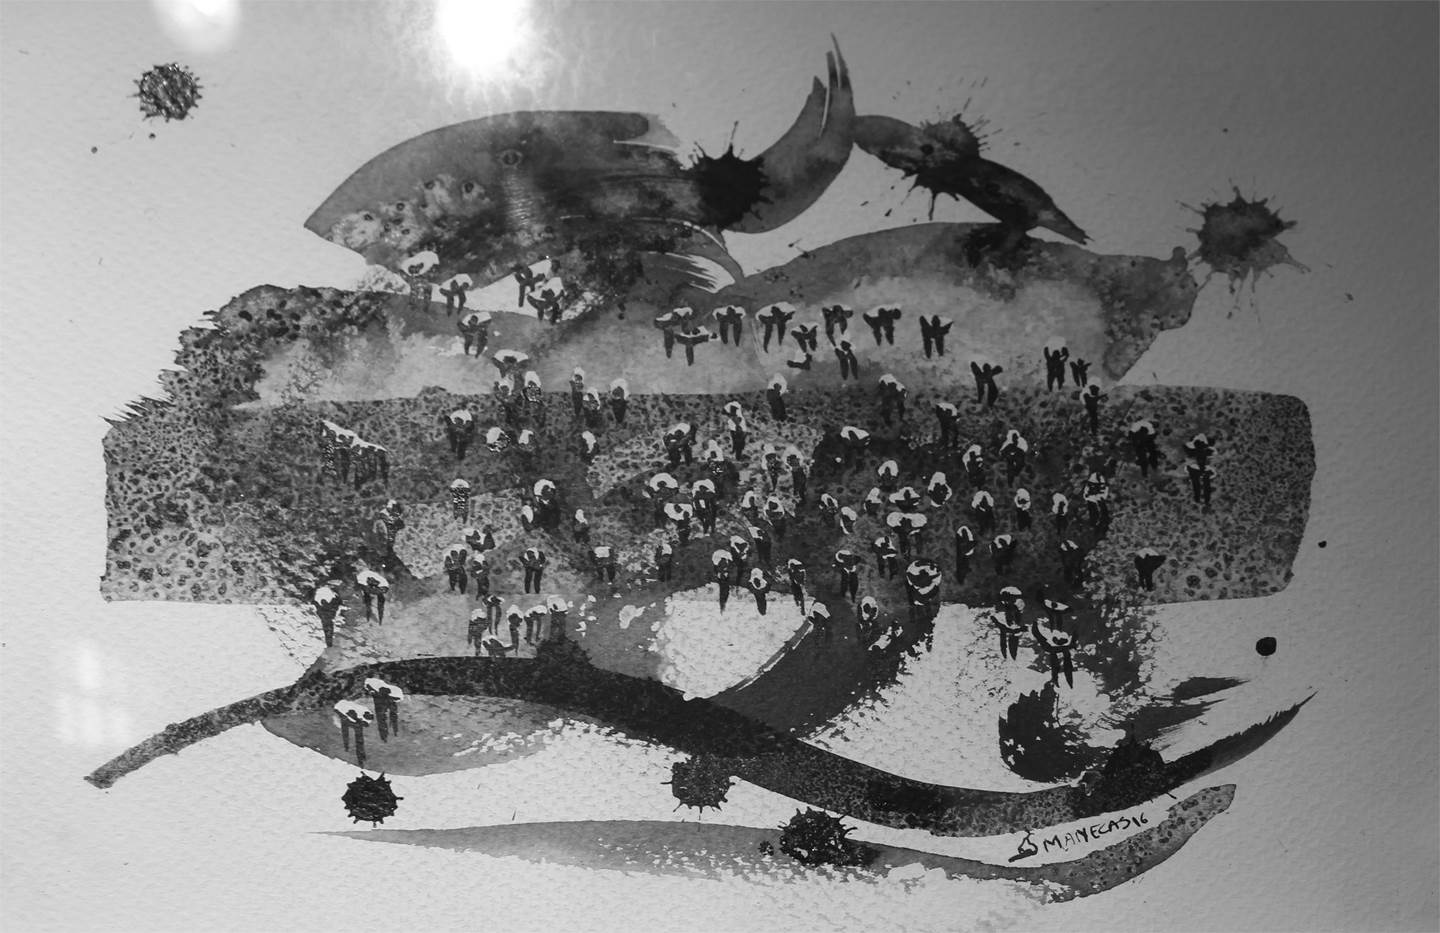 Migrações X, original Abstract Aquatint Drawing and Illustration by Manecas  Camelo